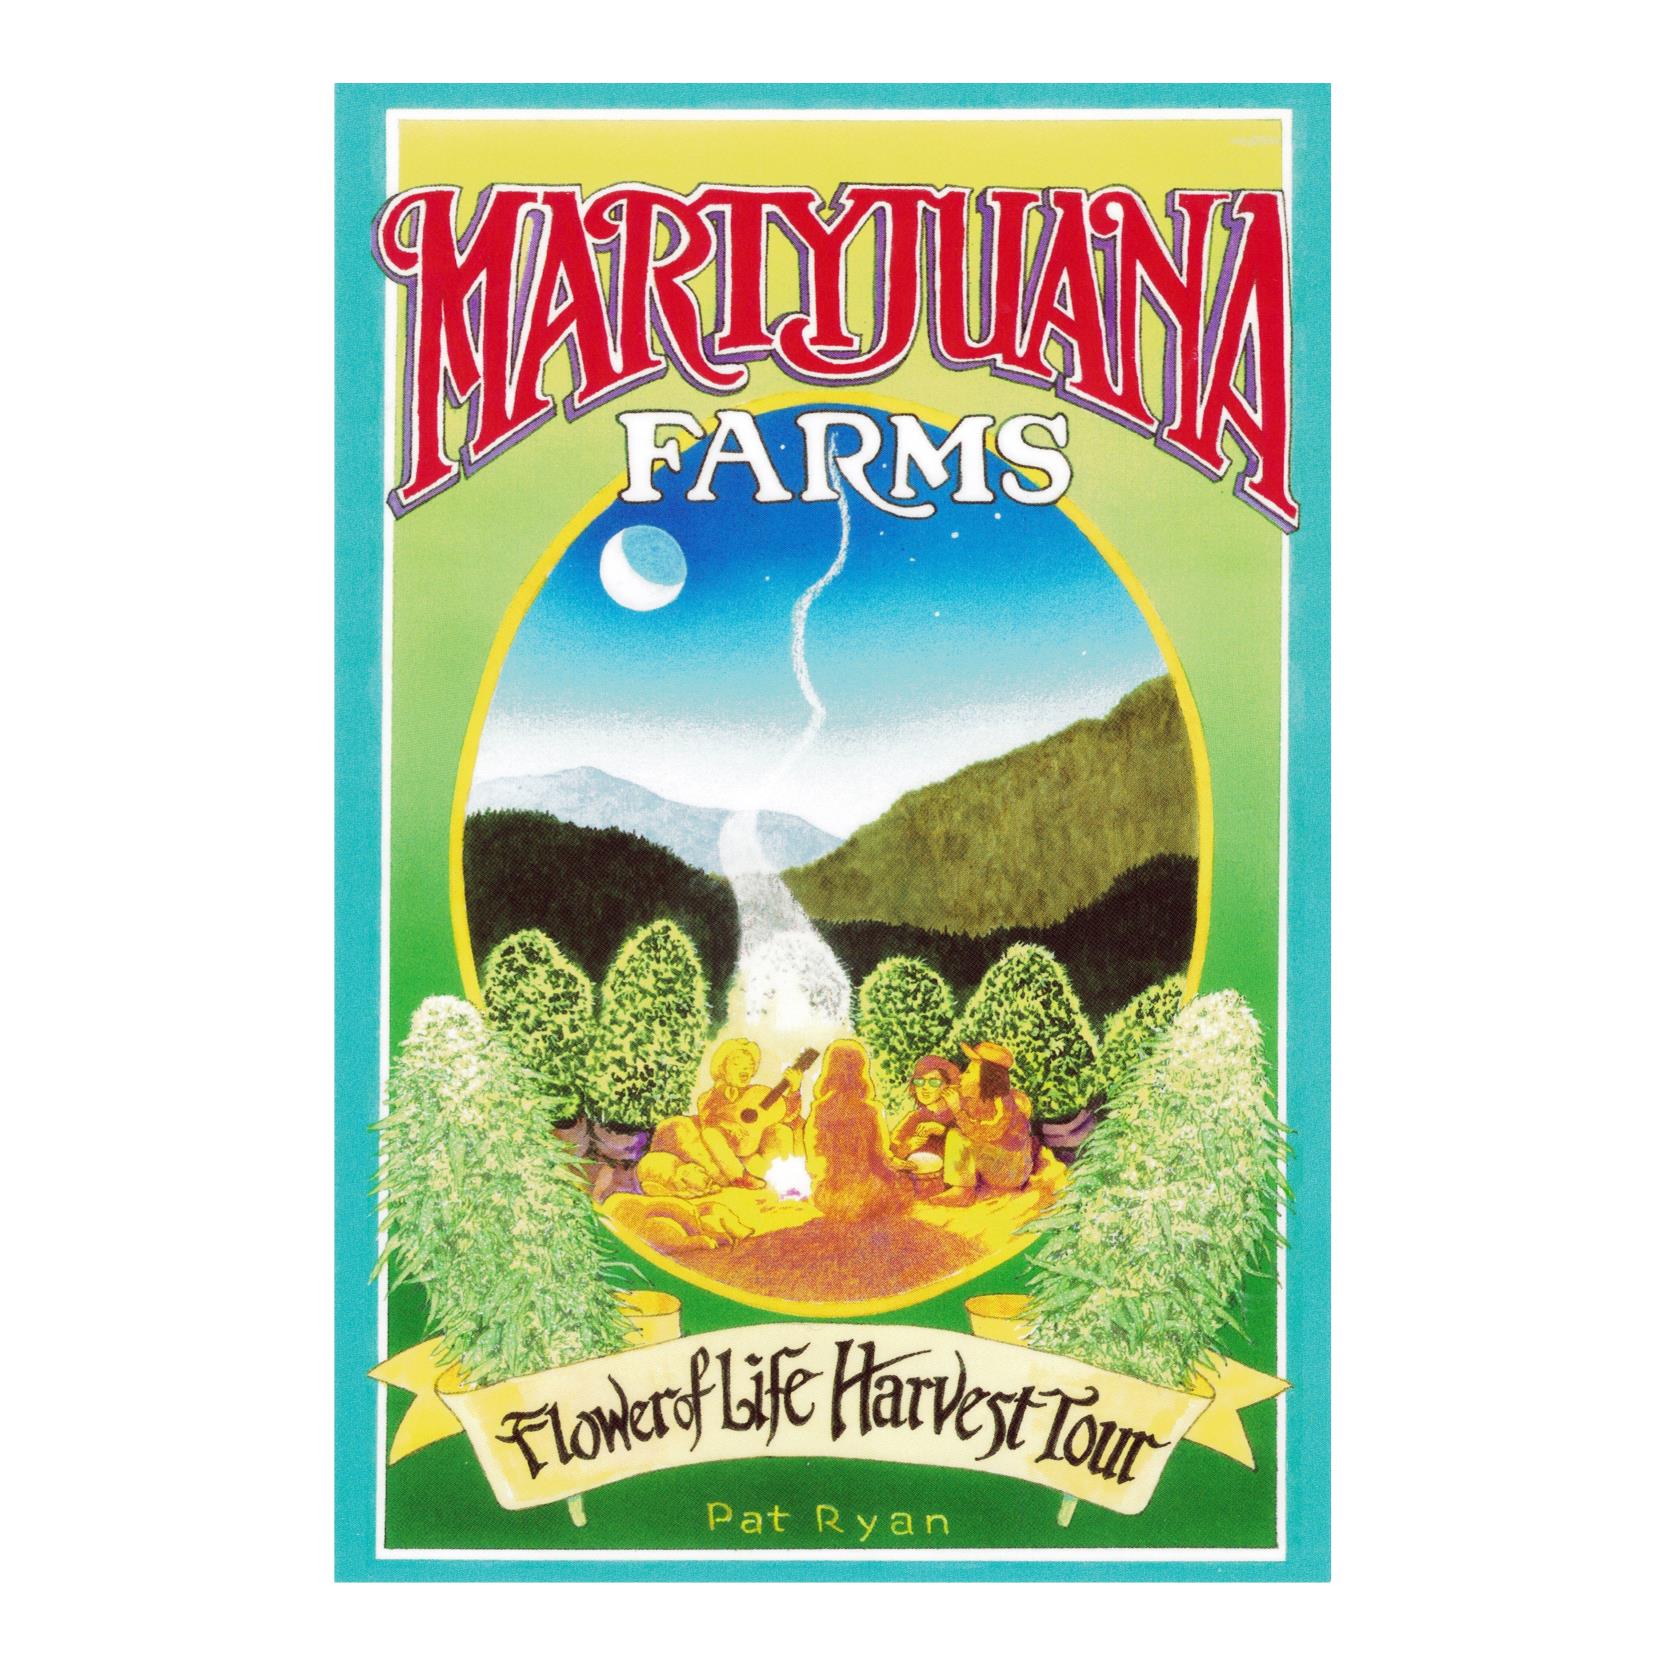 Pat Ryan Martyjuana Farms Flower of Life Harvest Tour